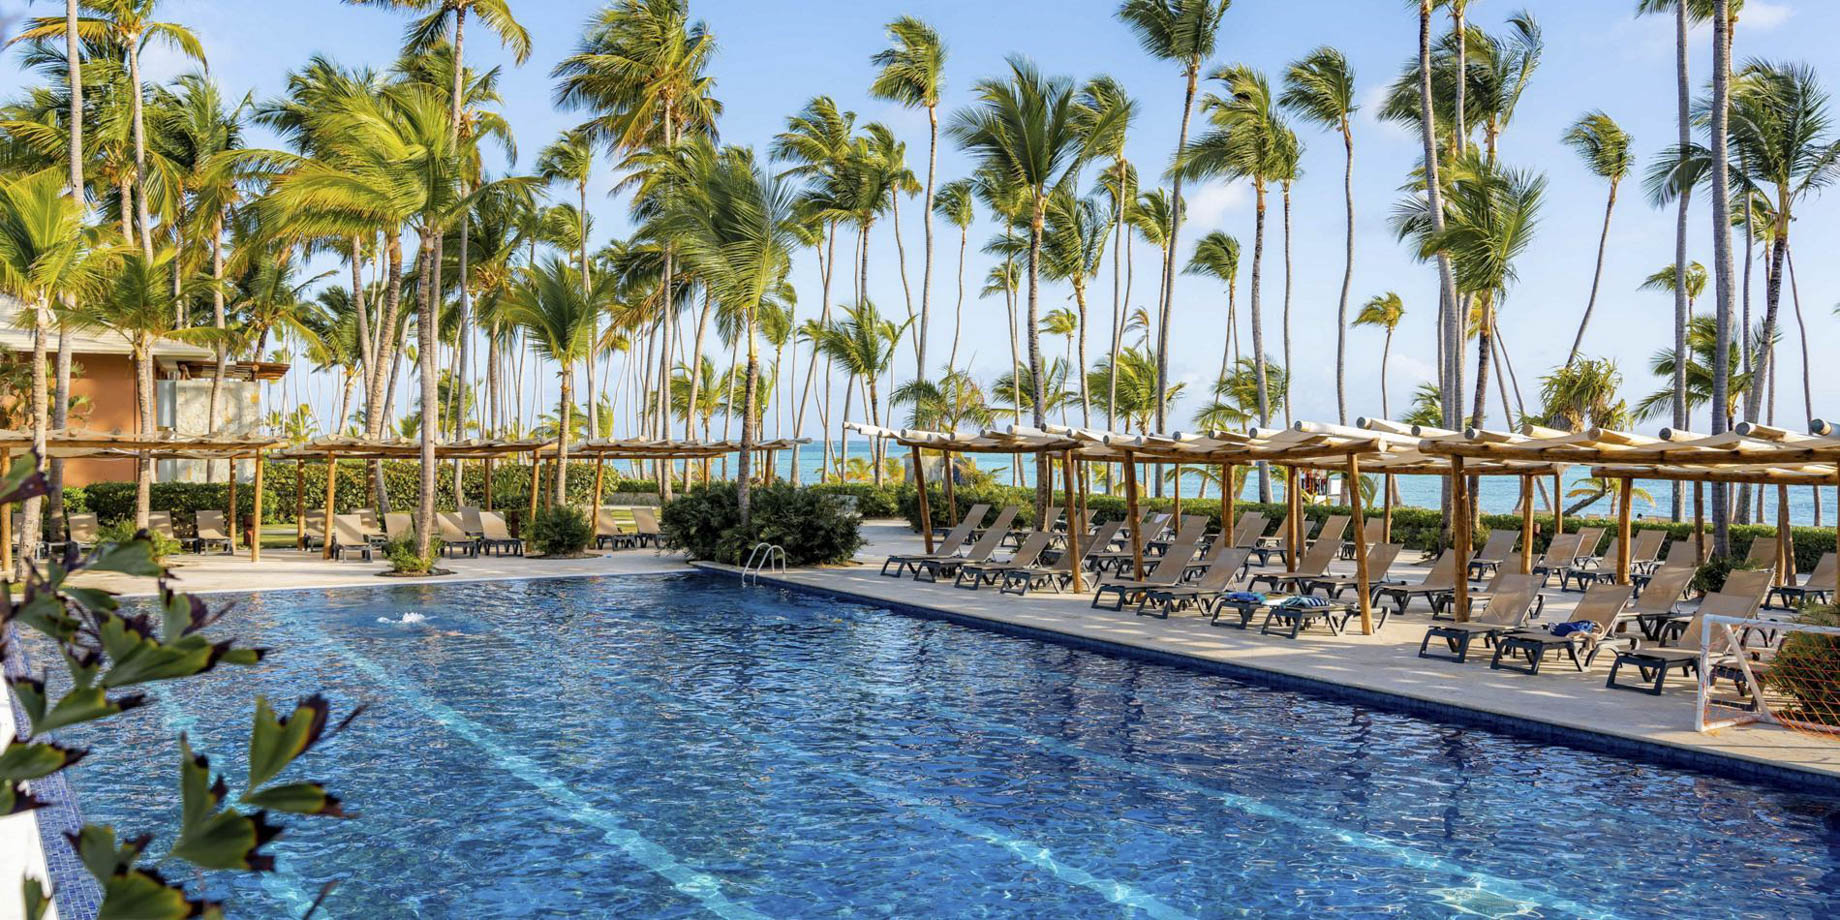 Barceló Bávaro Palace Hotel Grand Resort – Punta Cana, Dominican Republic – Pool